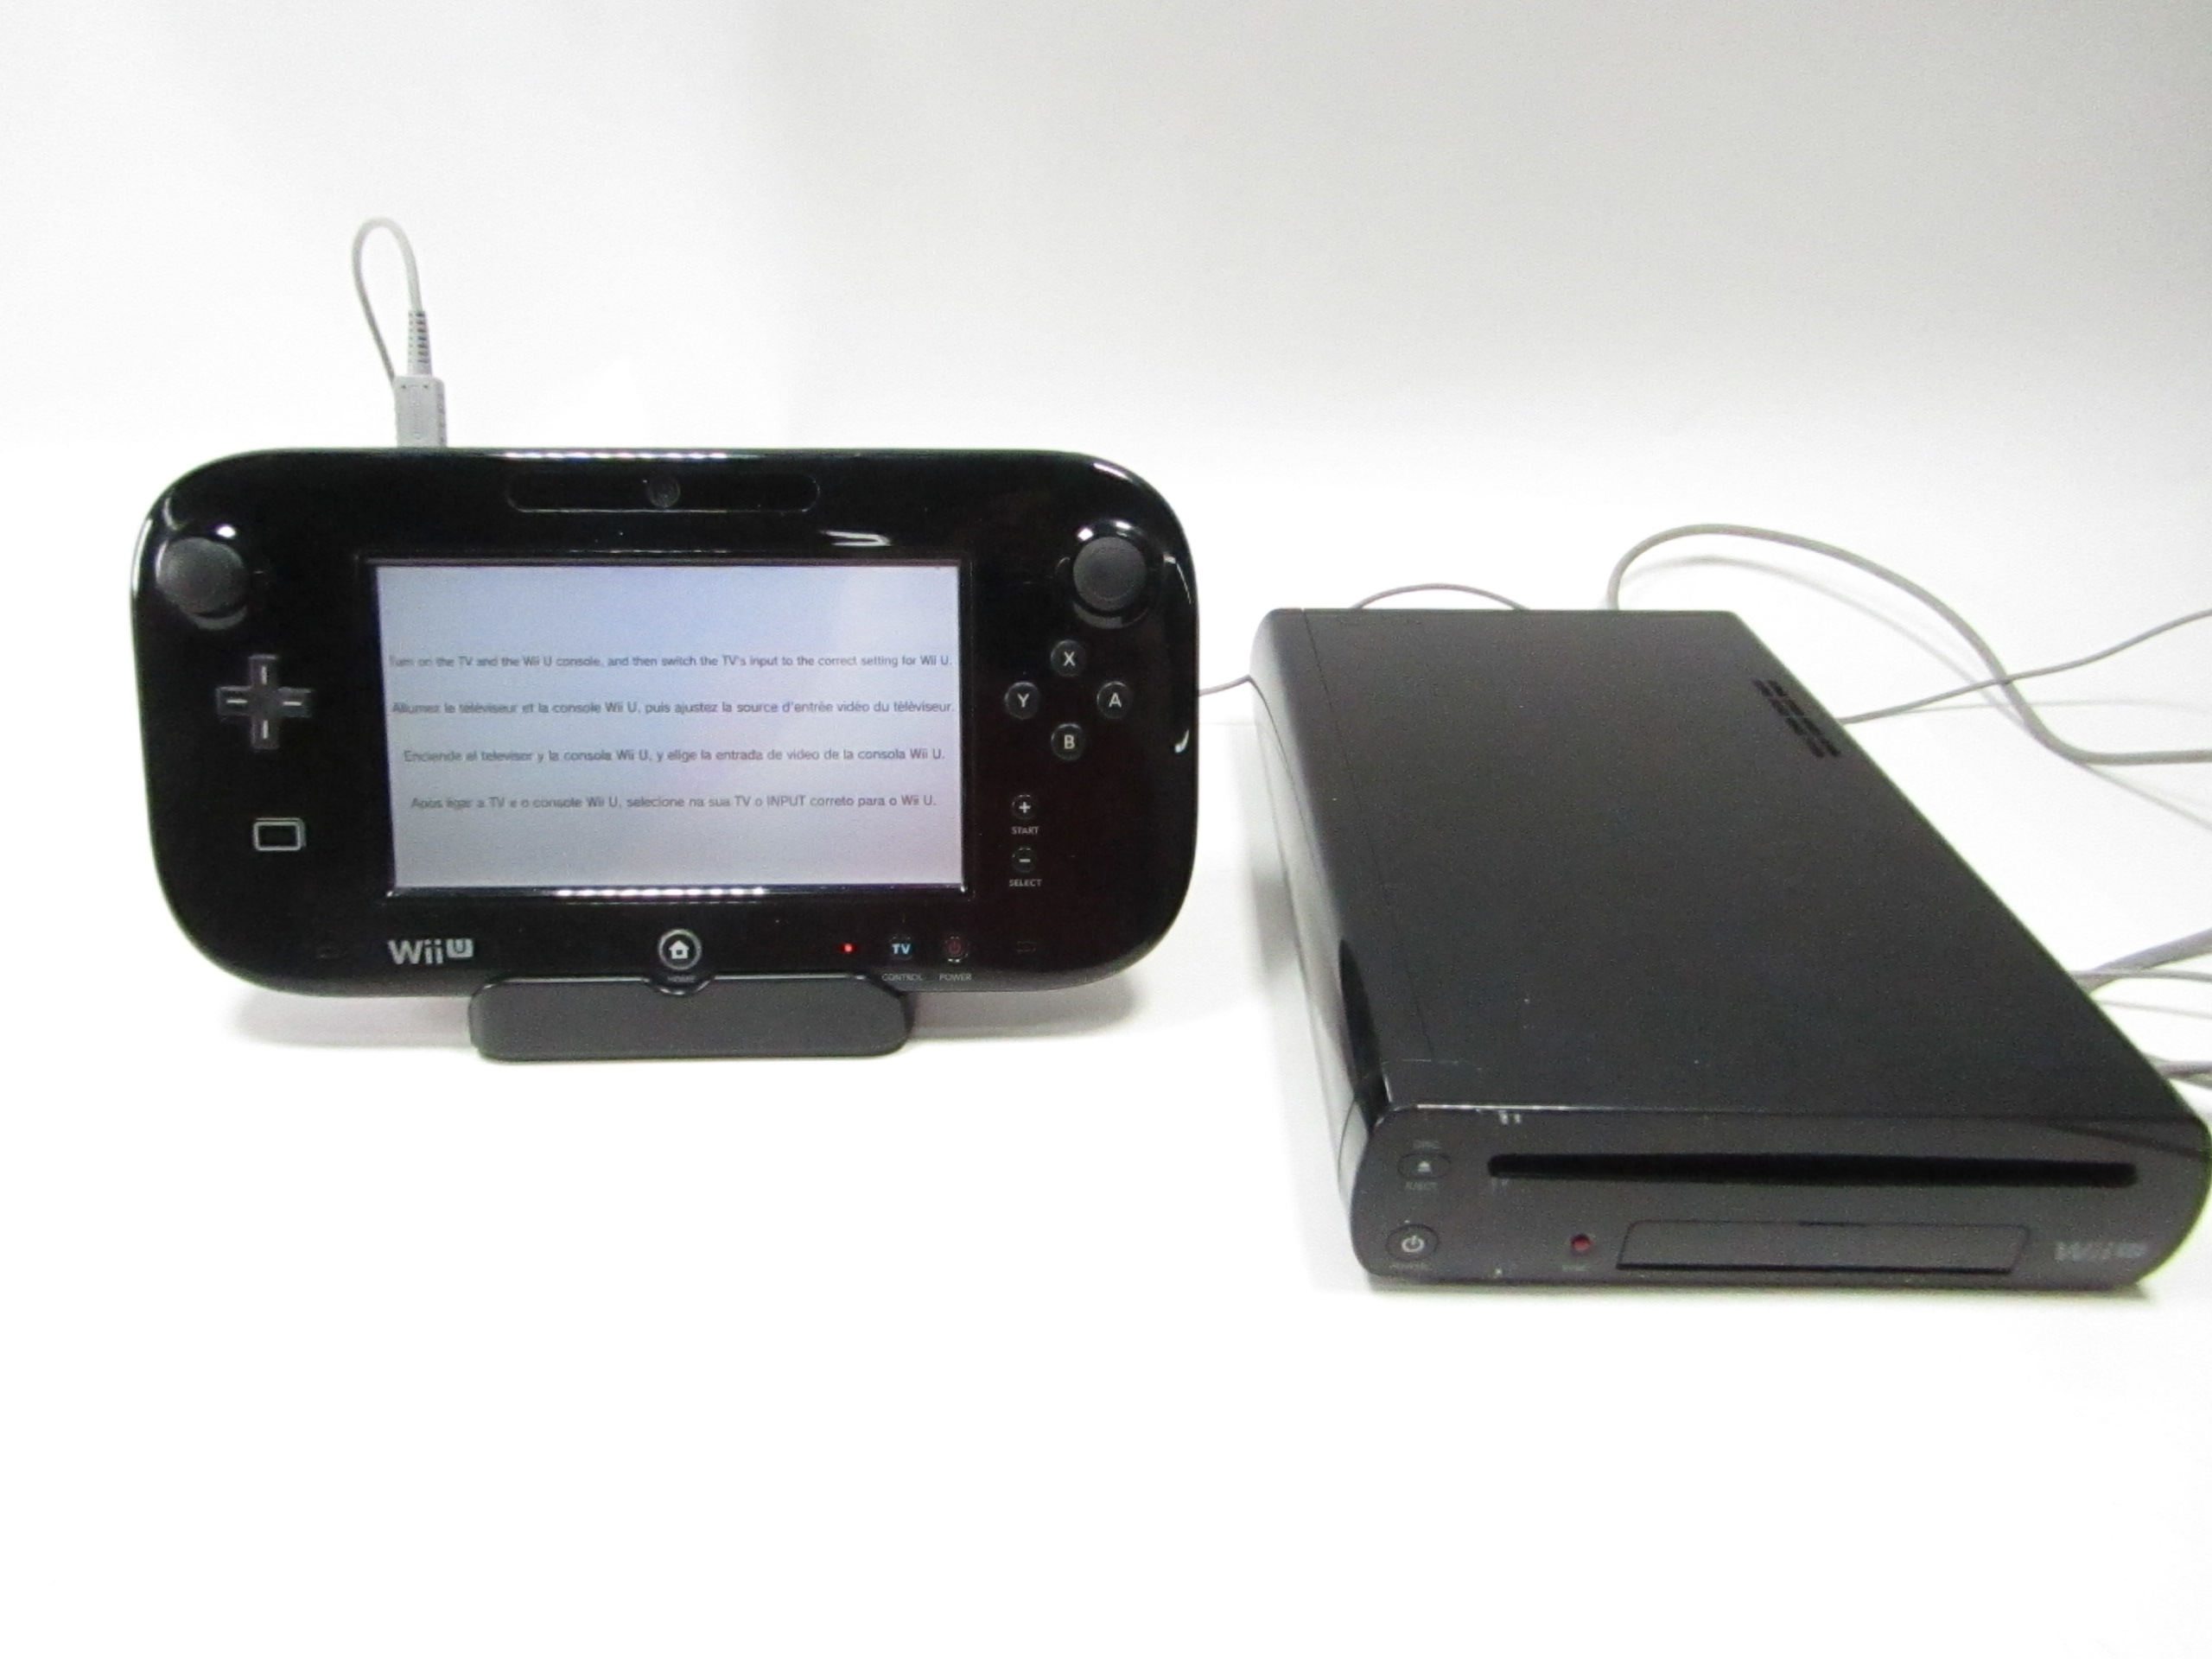 Wii U System 32 GB - Black Nintendo Console on Sale